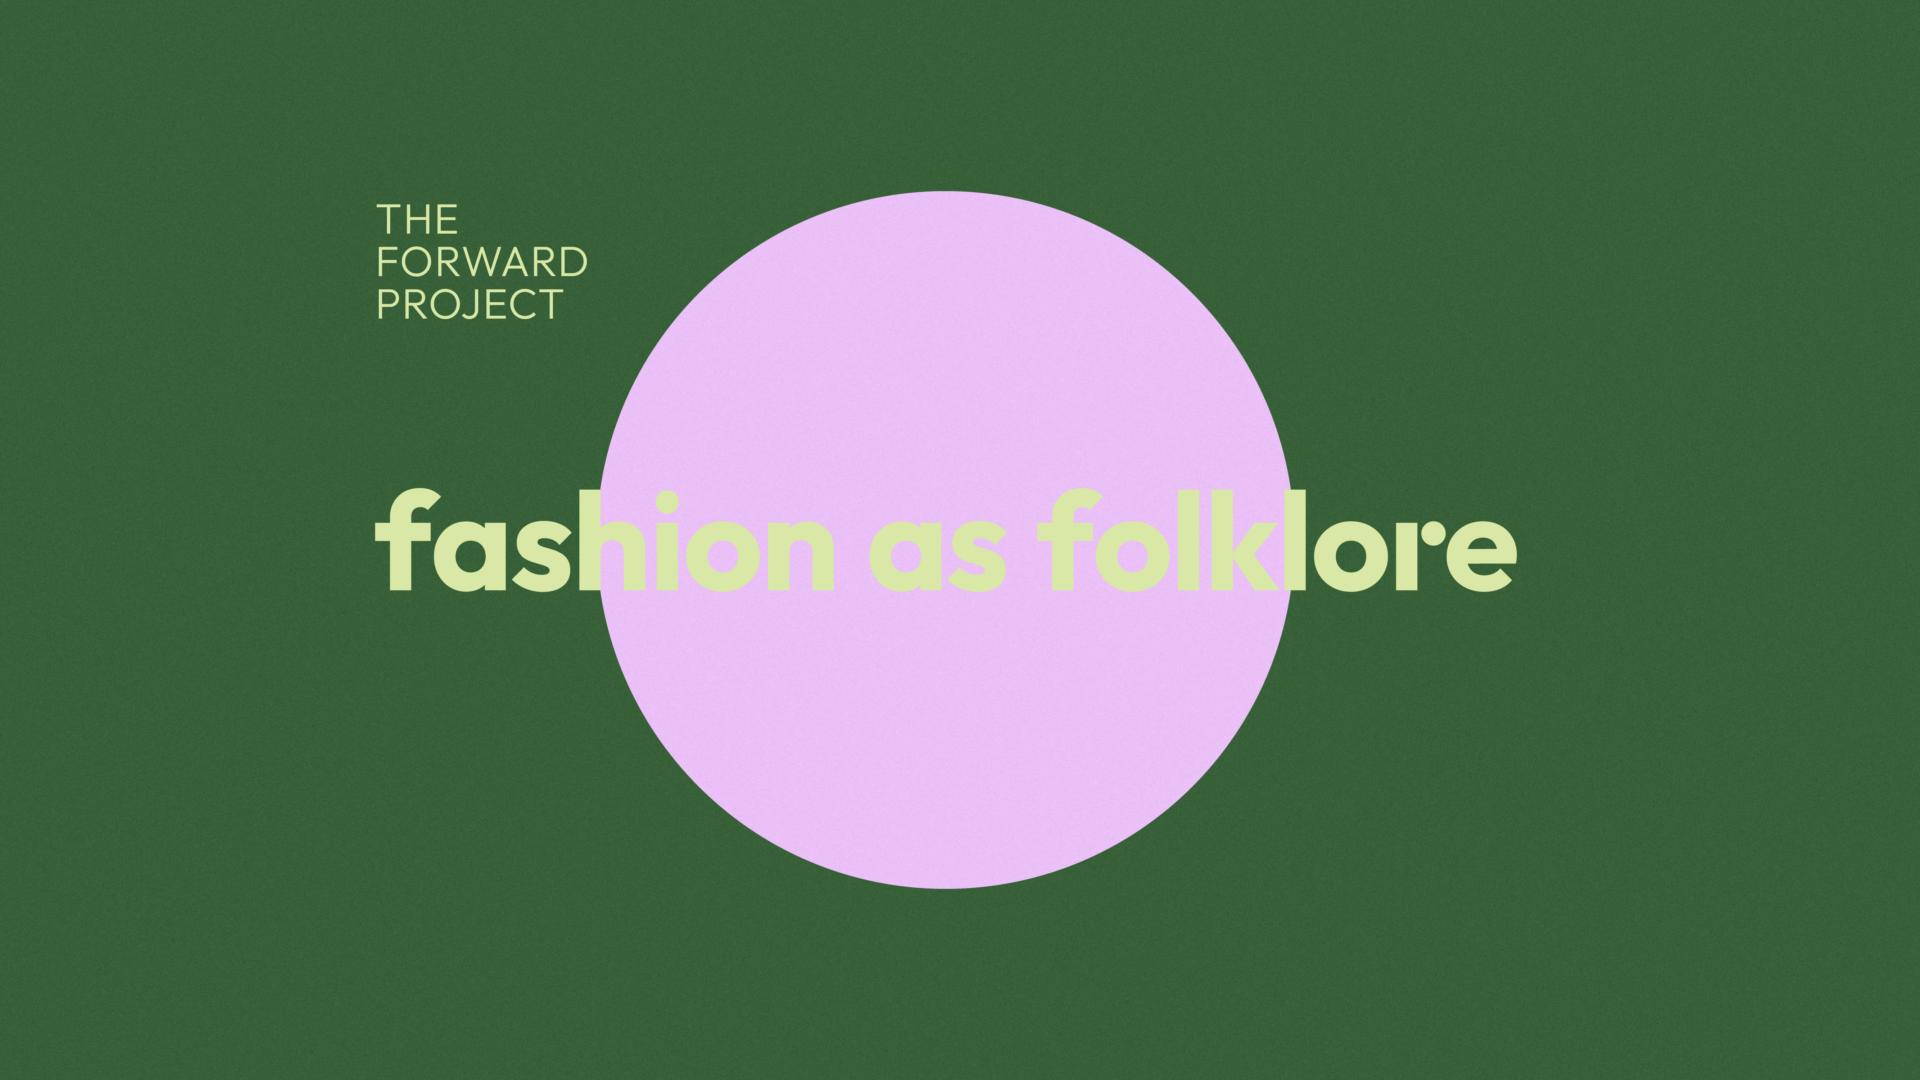 'Fashion as Folklore' A challenge-led design symposium